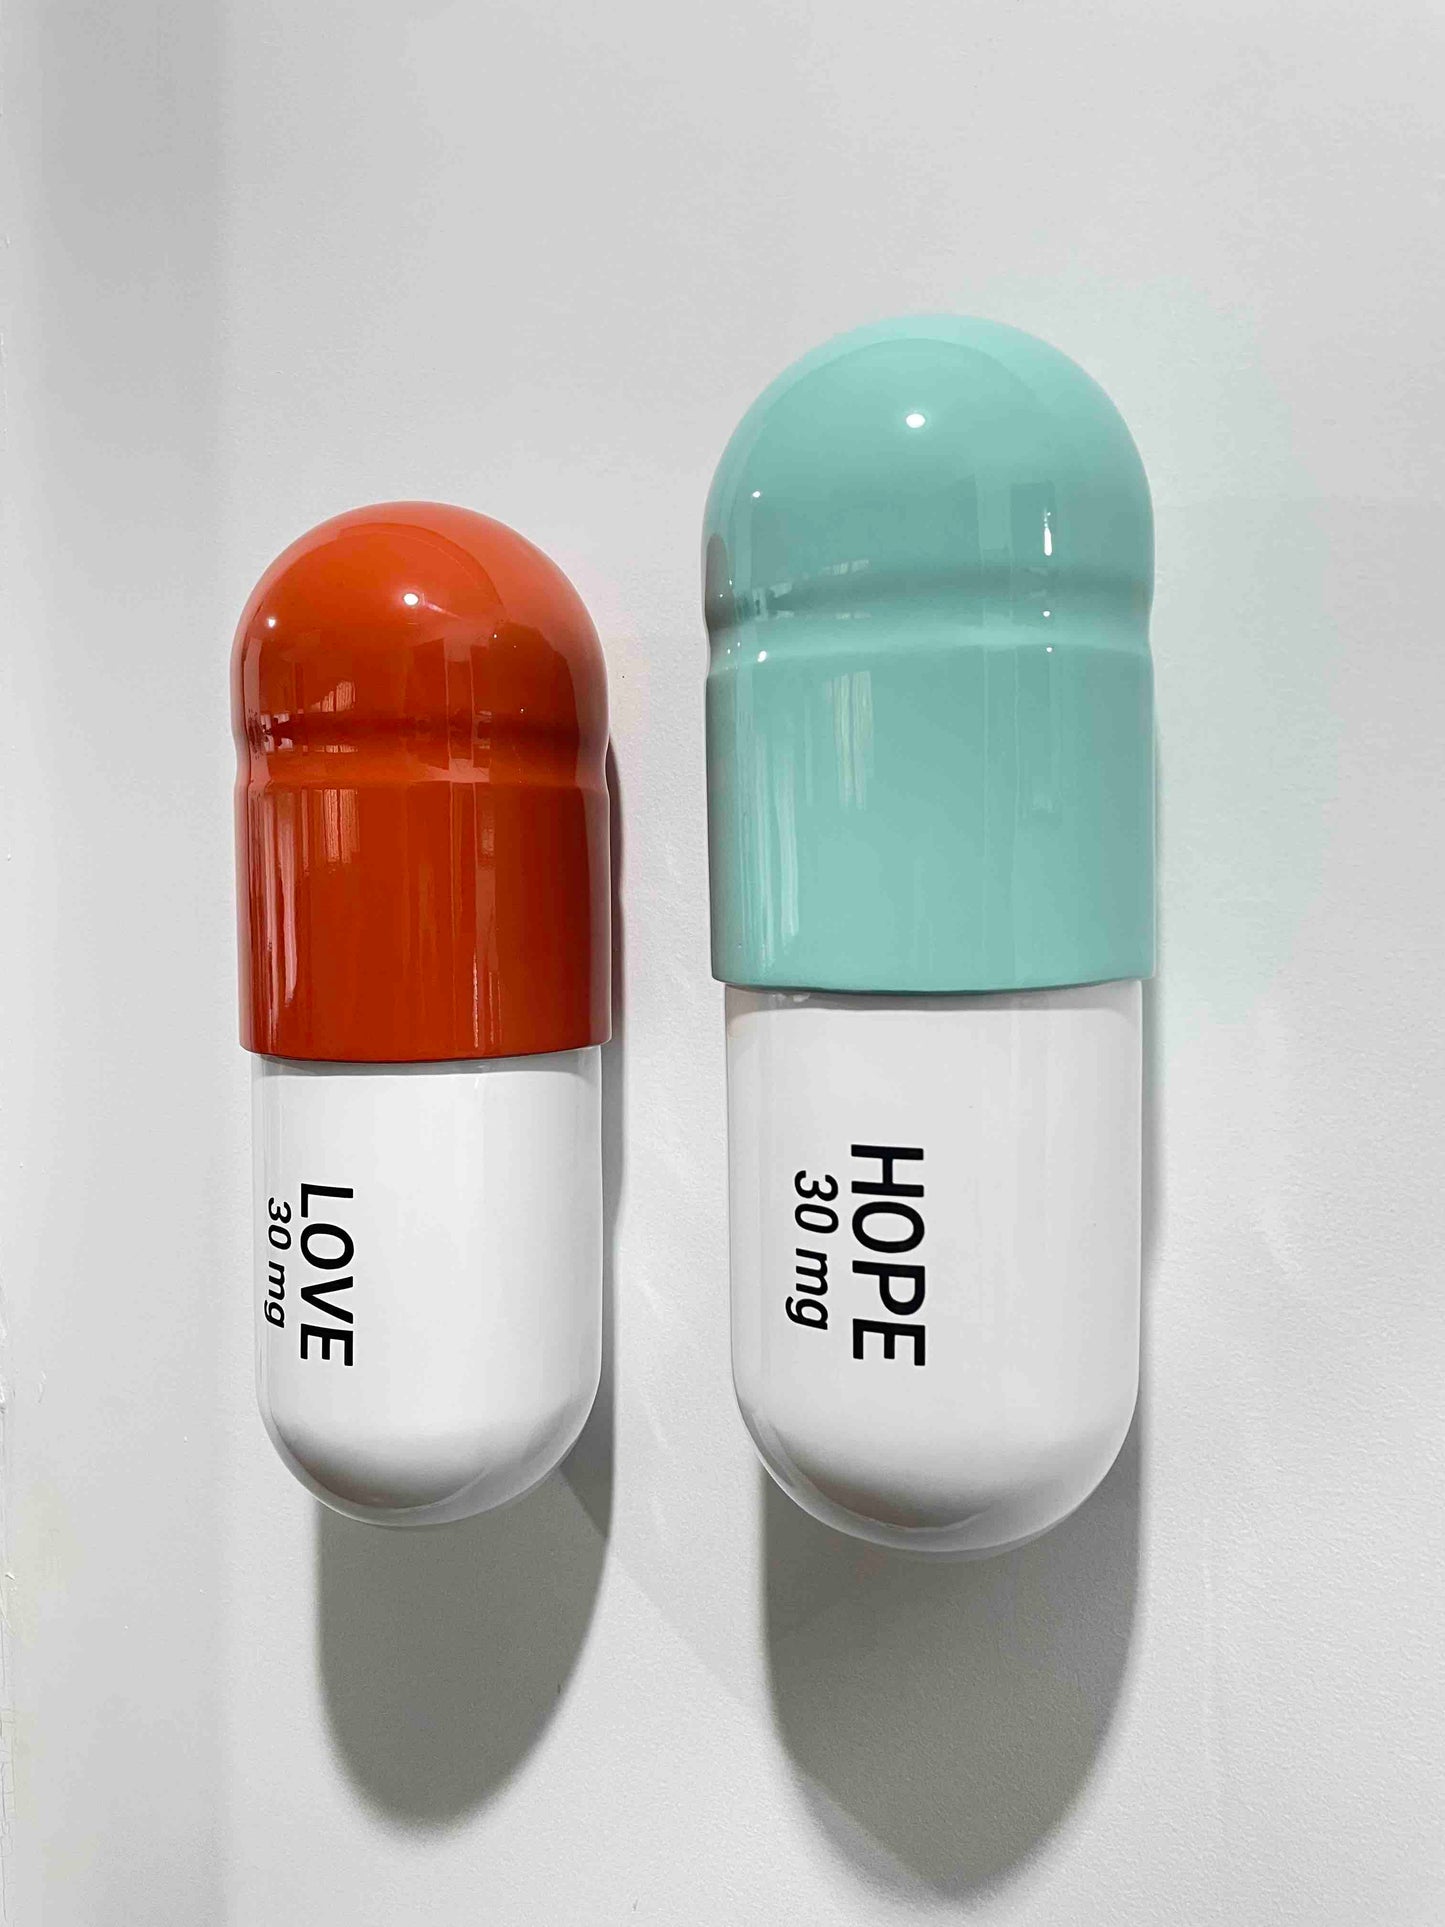 30 MG Hope Love pill Combo (mint green, orange, white) - figurative sculpture